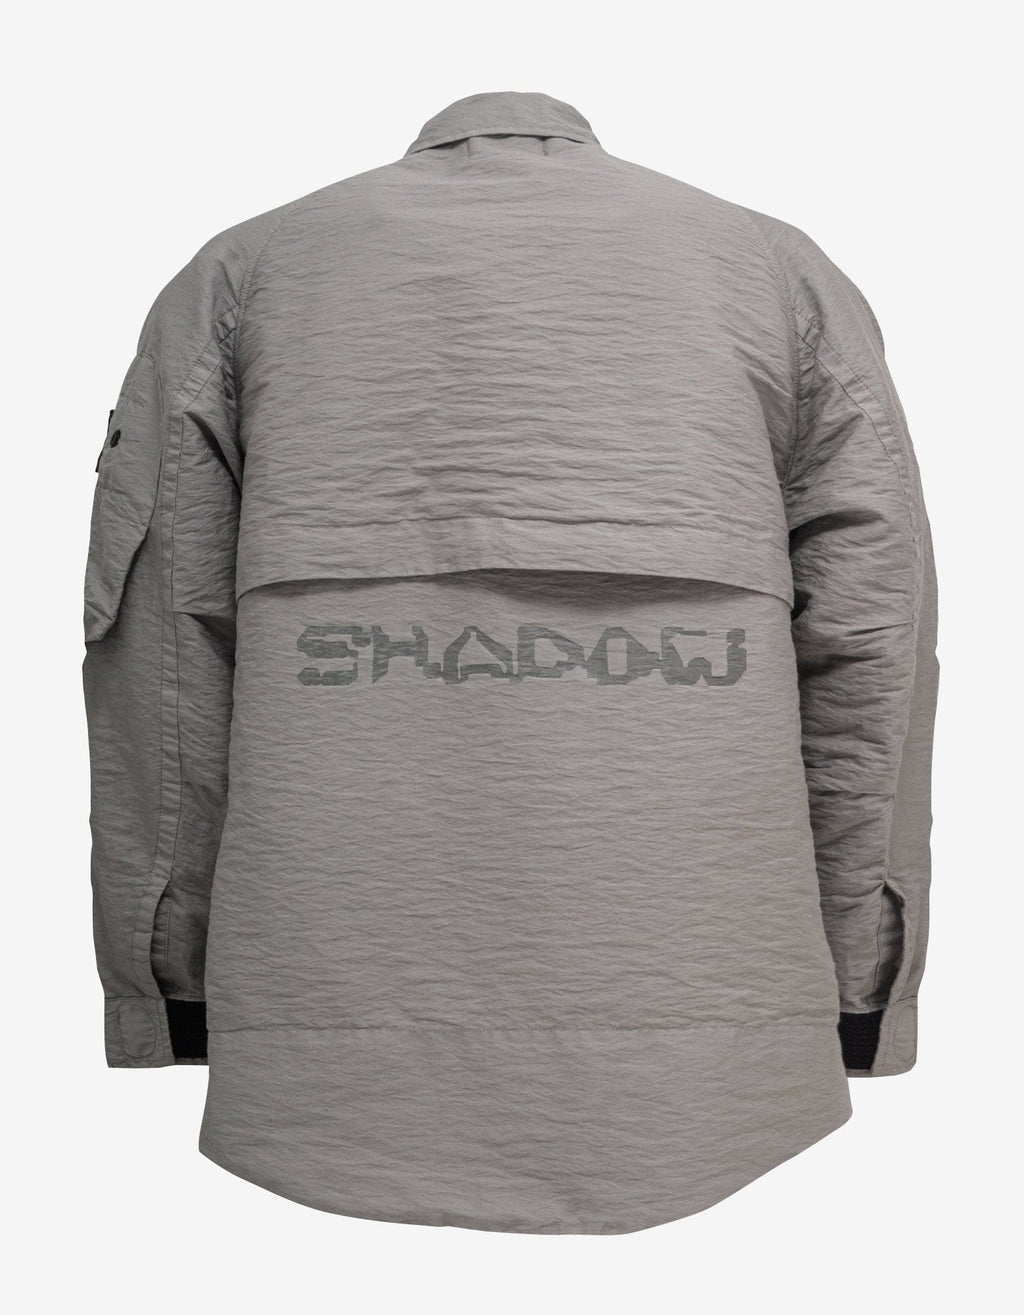 Stone Island Shadow Project Grey Overshirt Double Face CO/NY Monofilament